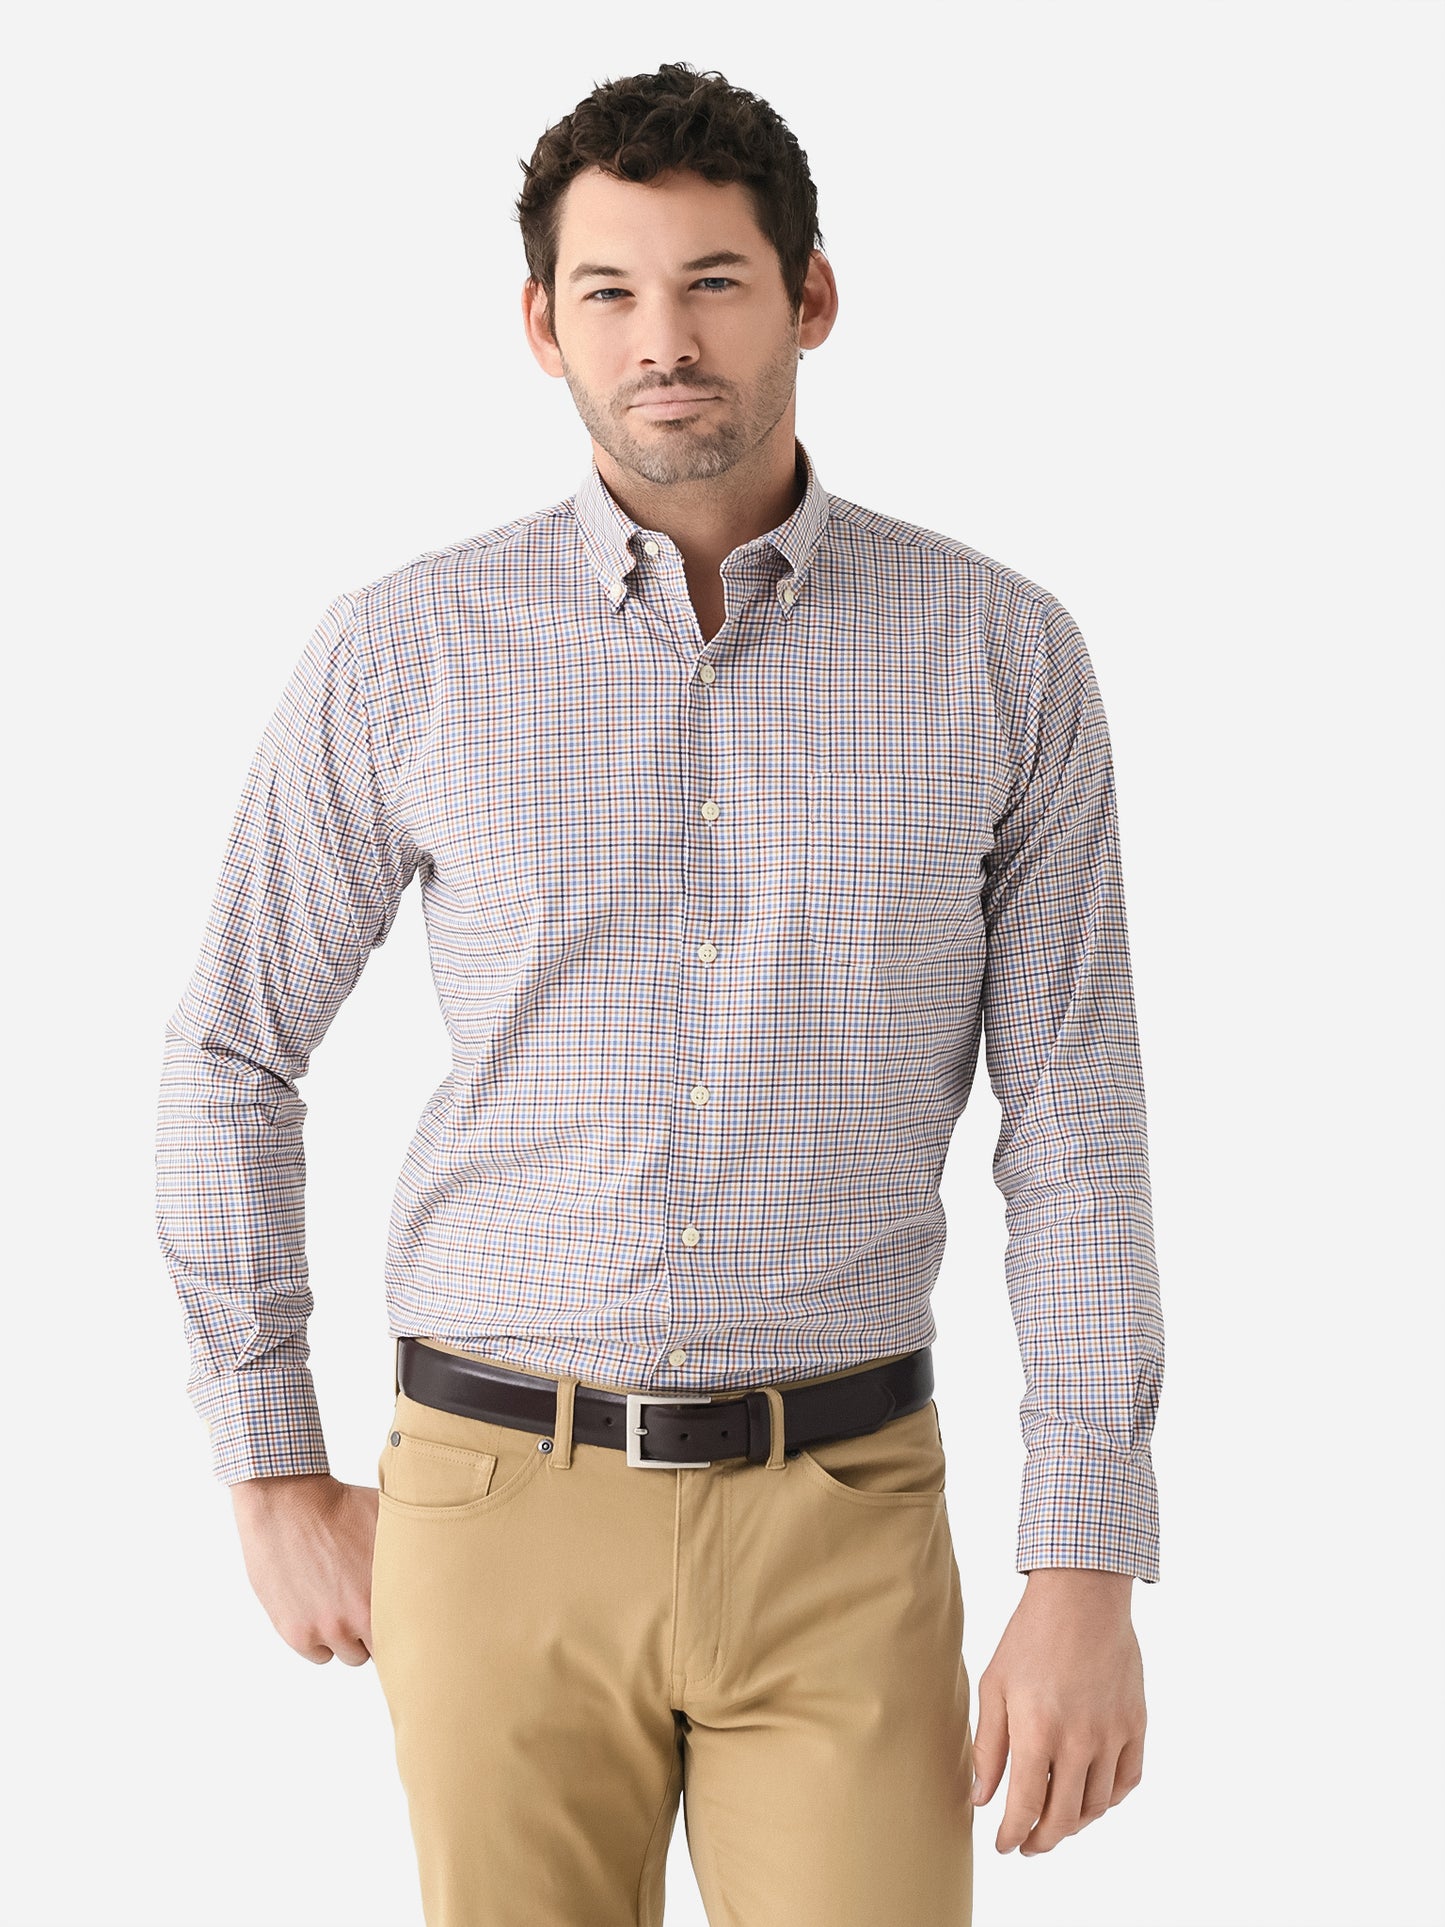 Peter Millar Crown Men's Market Cotton-Stretch Sport Shirt